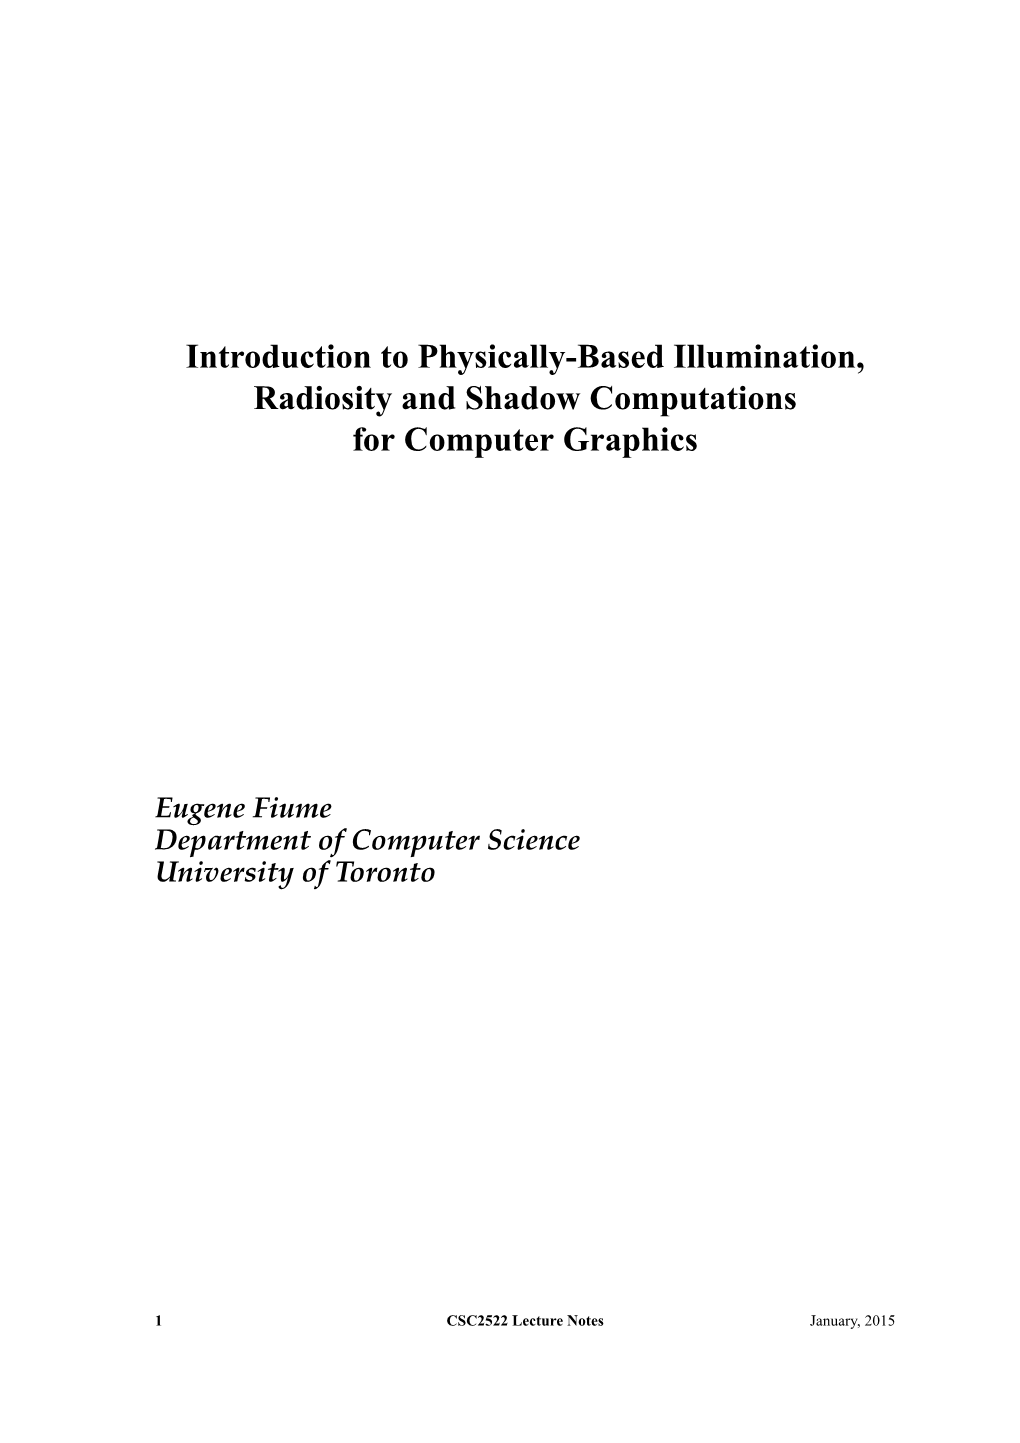 Introduction to Physically-Based Illumination, Radiosity and Shadowcomputations Forcomputer Graphics